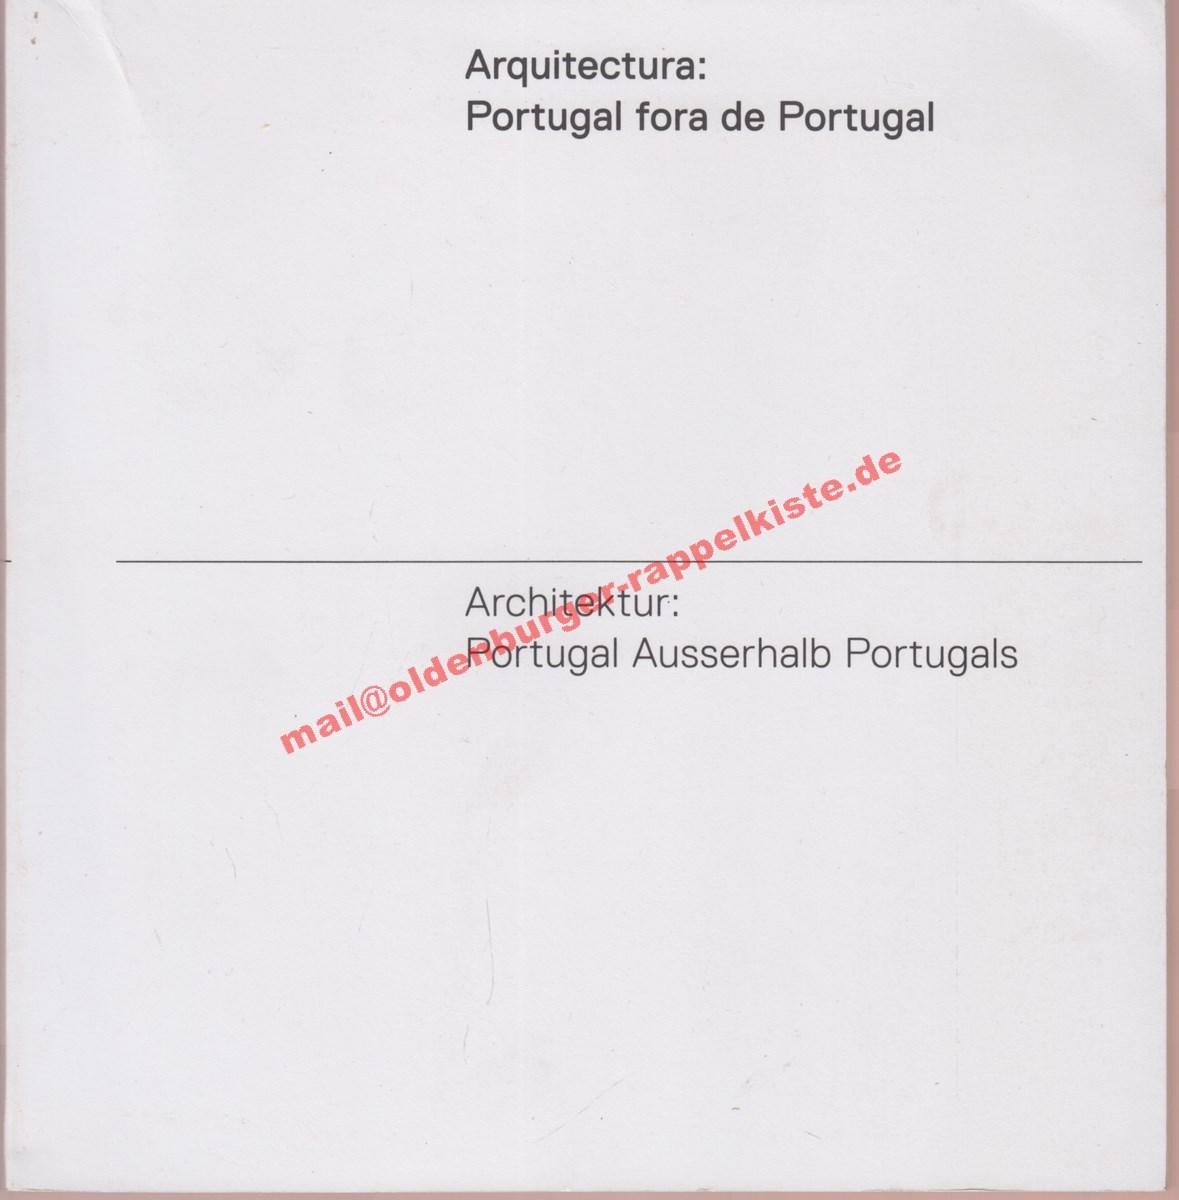 Arquitectura: Portugal fora de Portugal.